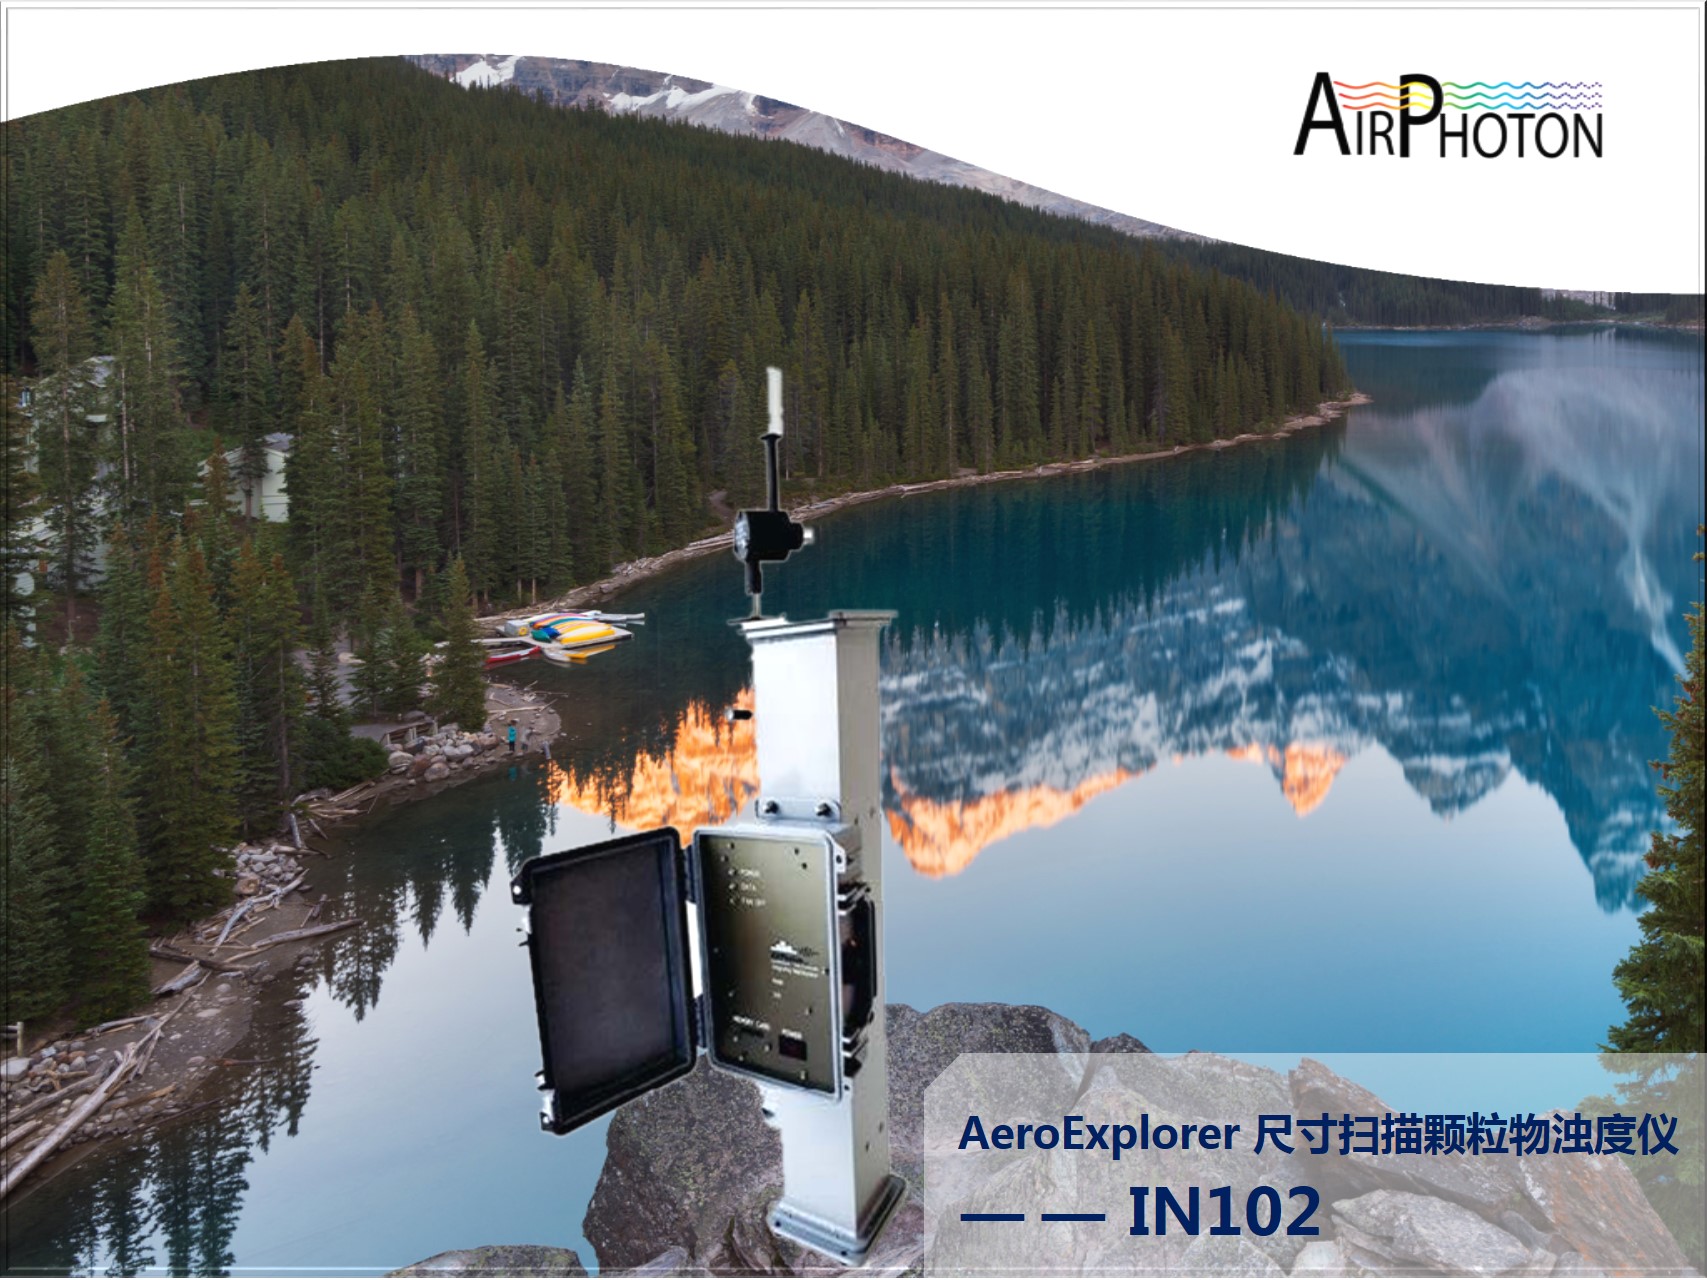  AirPhoton AeroExplorer多尺寸颗粒物浊度仪——IN102